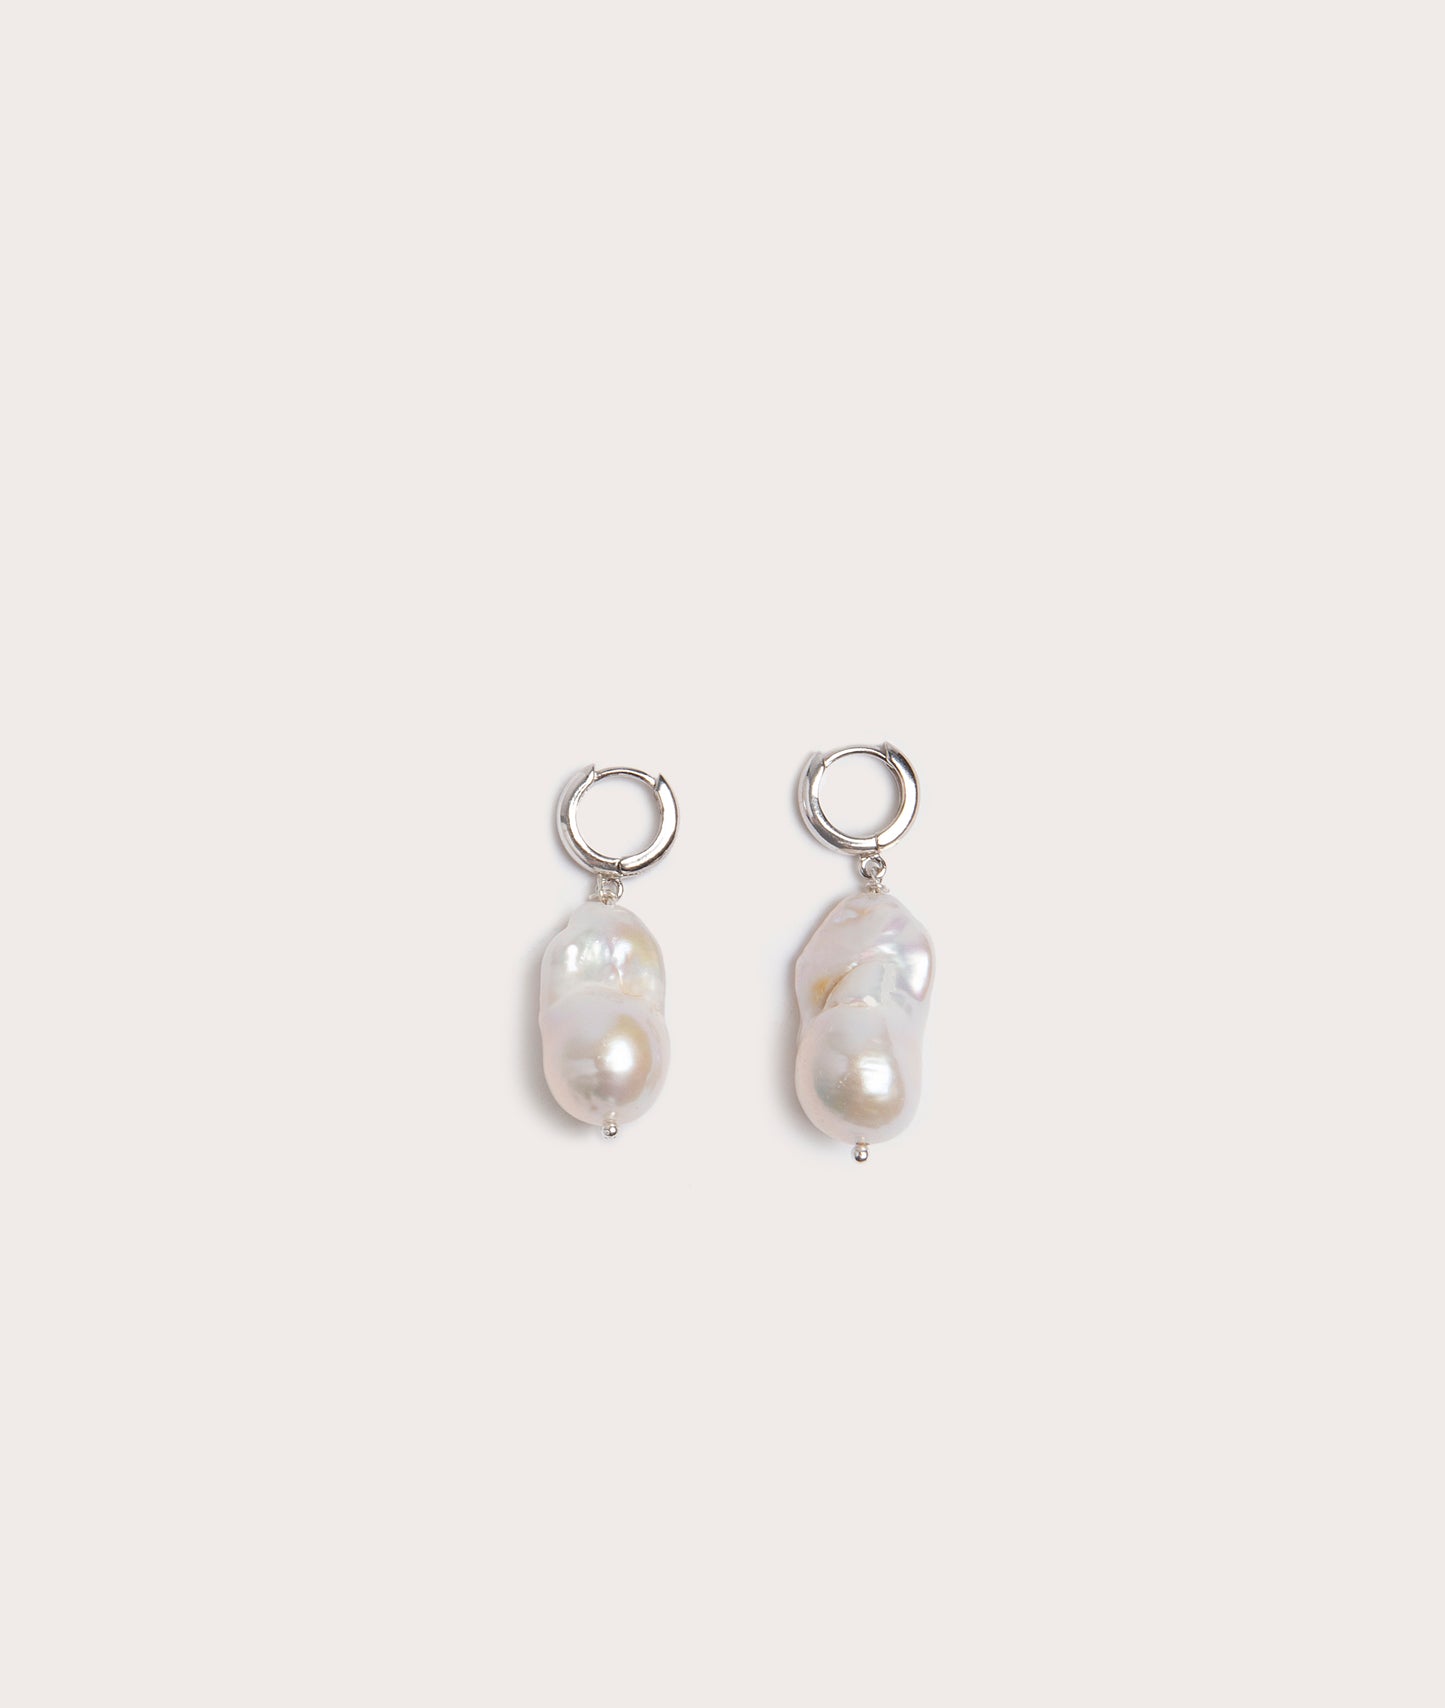 Host Earrings, Baroque Pearl